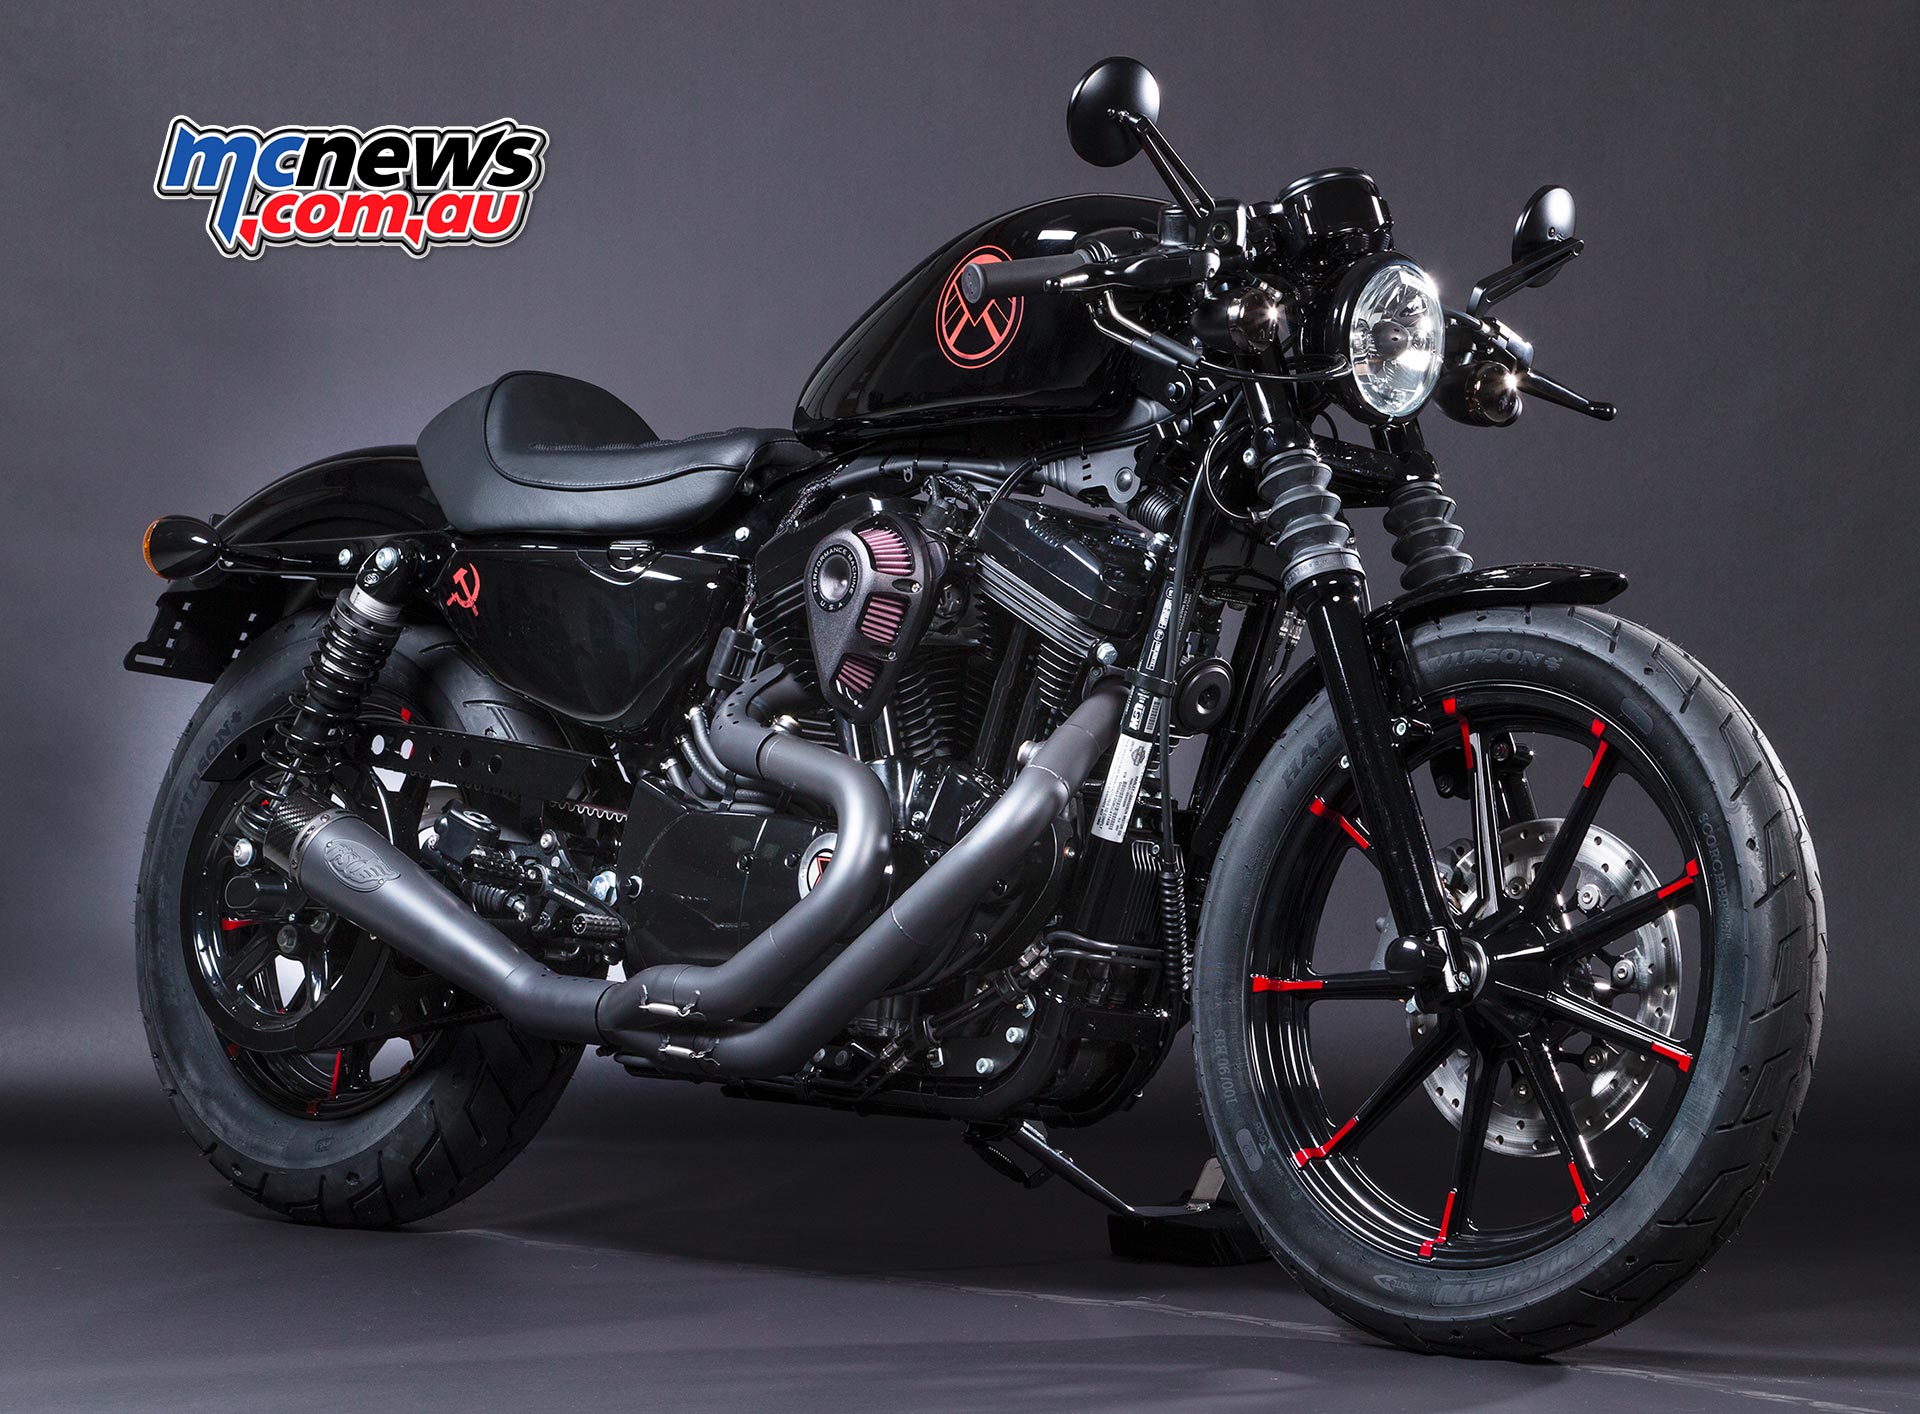 Harley Davidson Marvel Super Hero Customs Mcnews